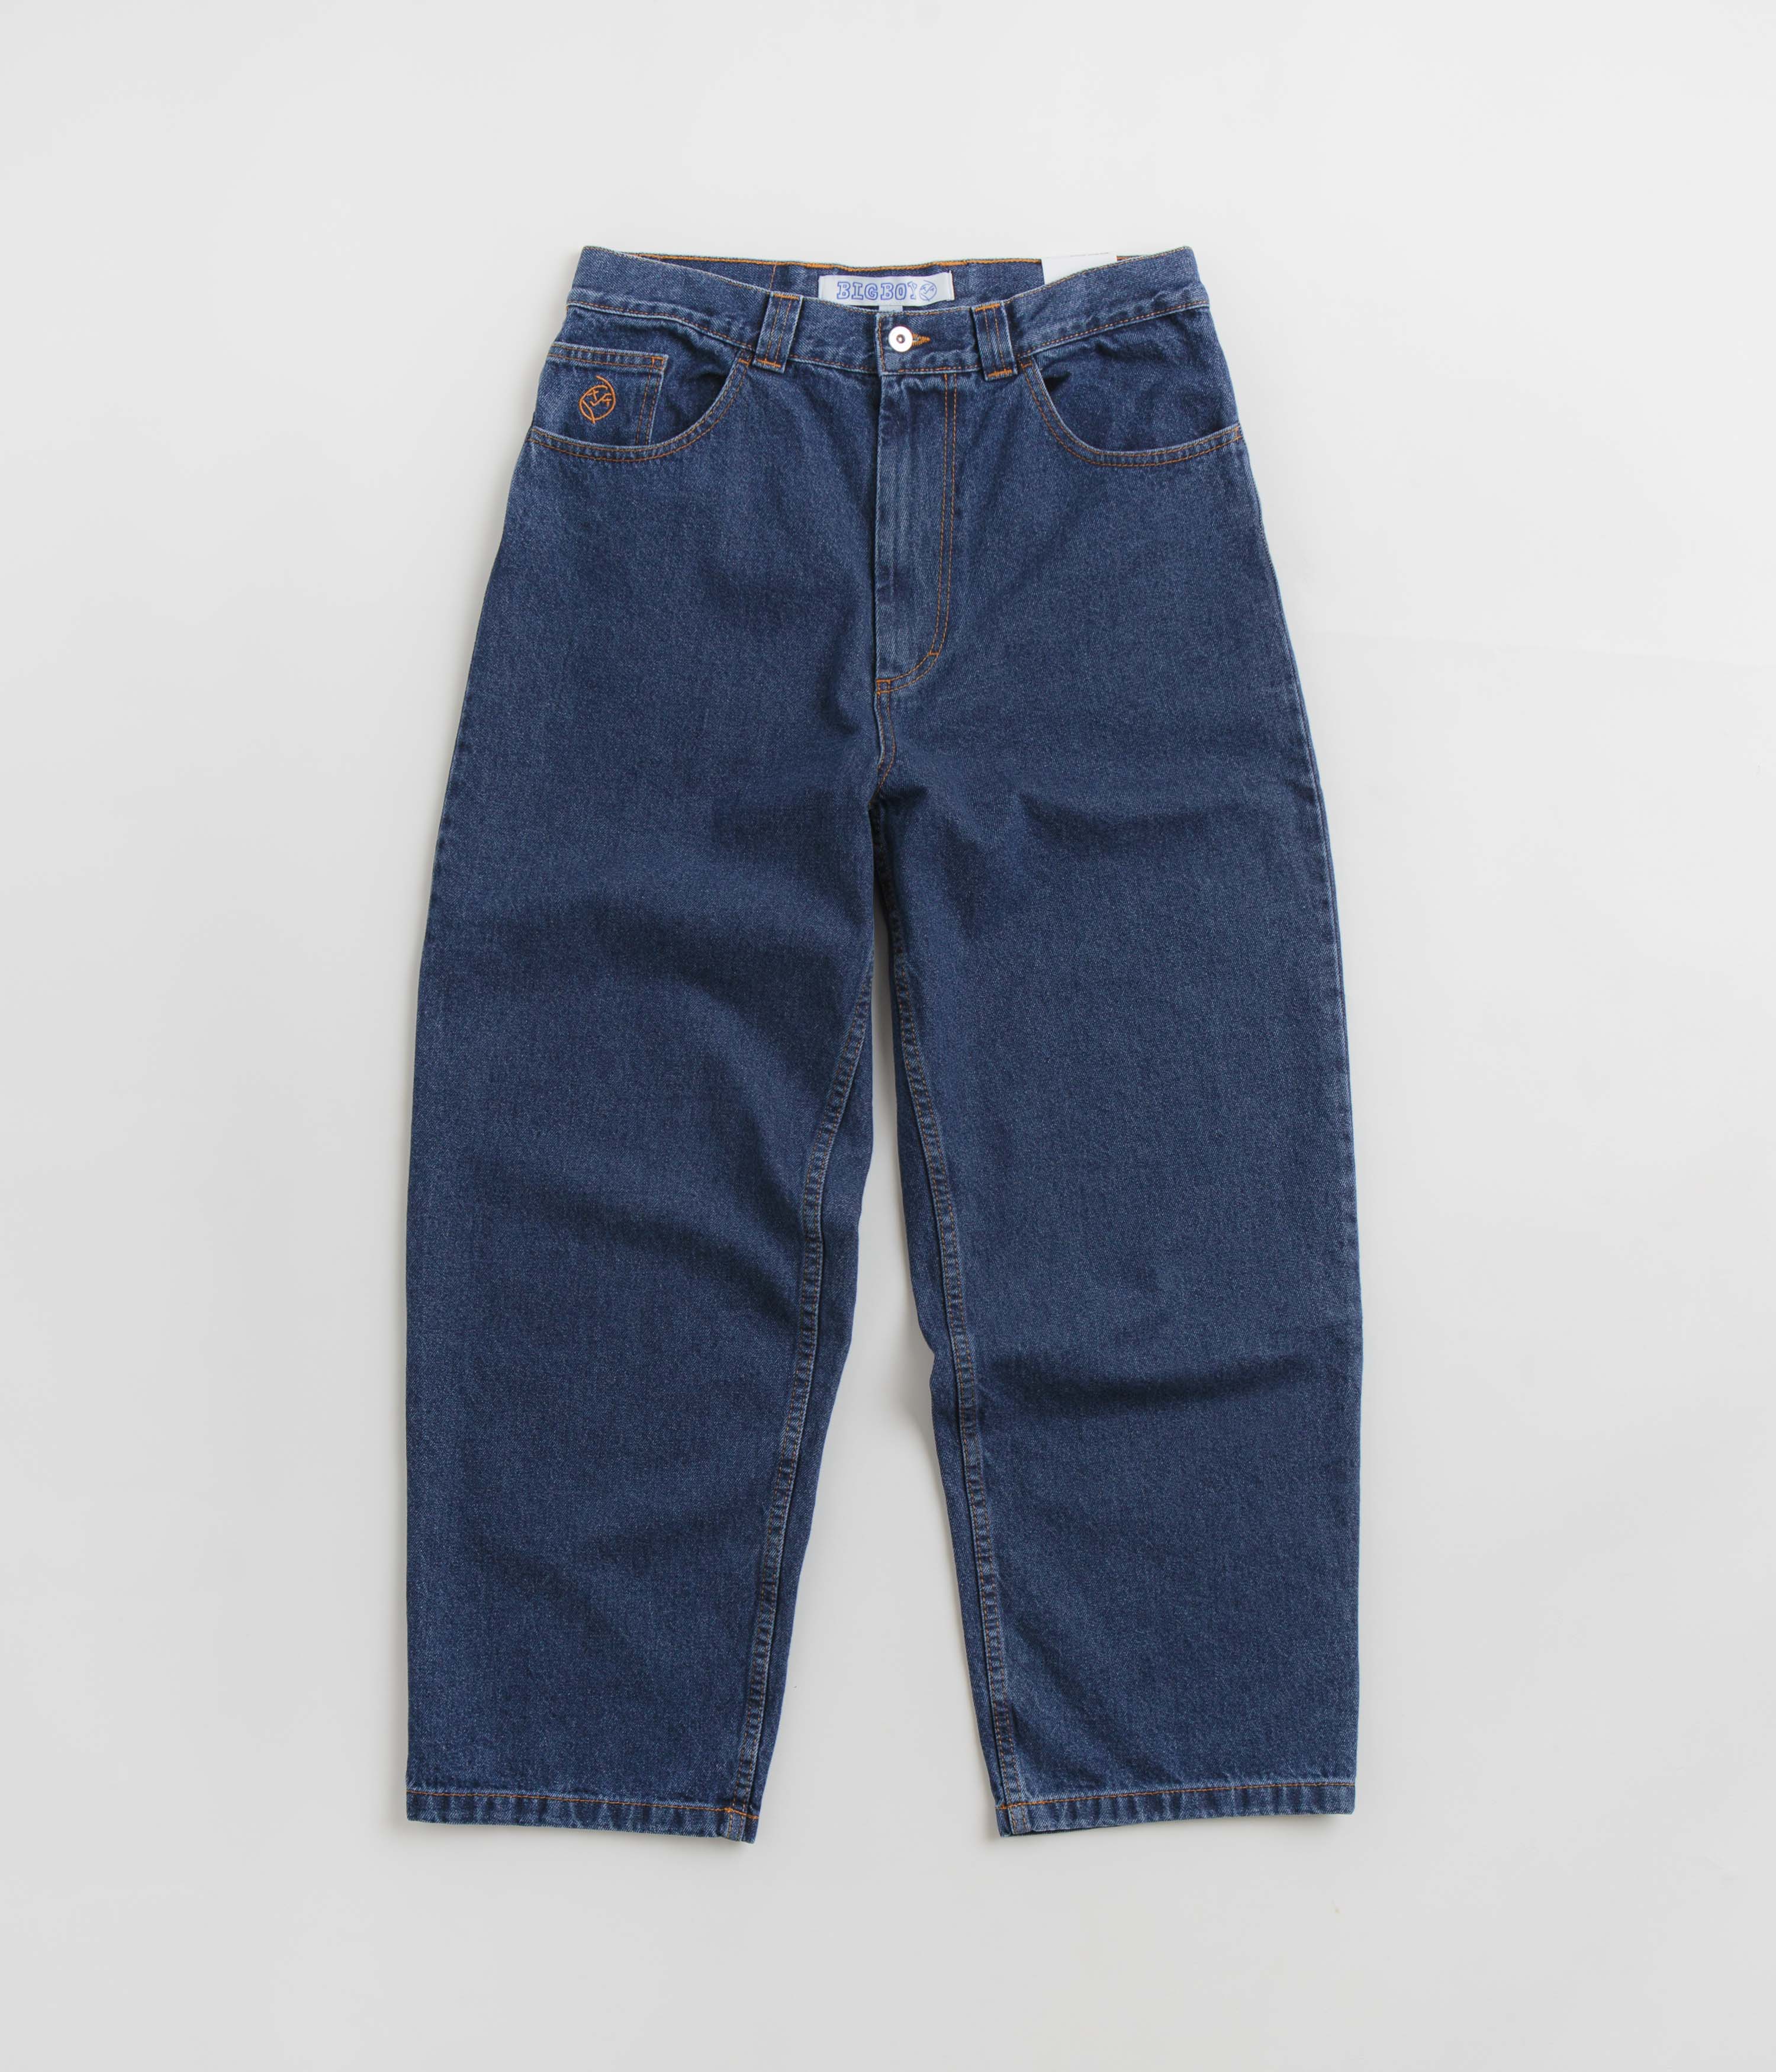 Yardsale Ripper Jeans - Overdyed Blue - BillrichardsonShops